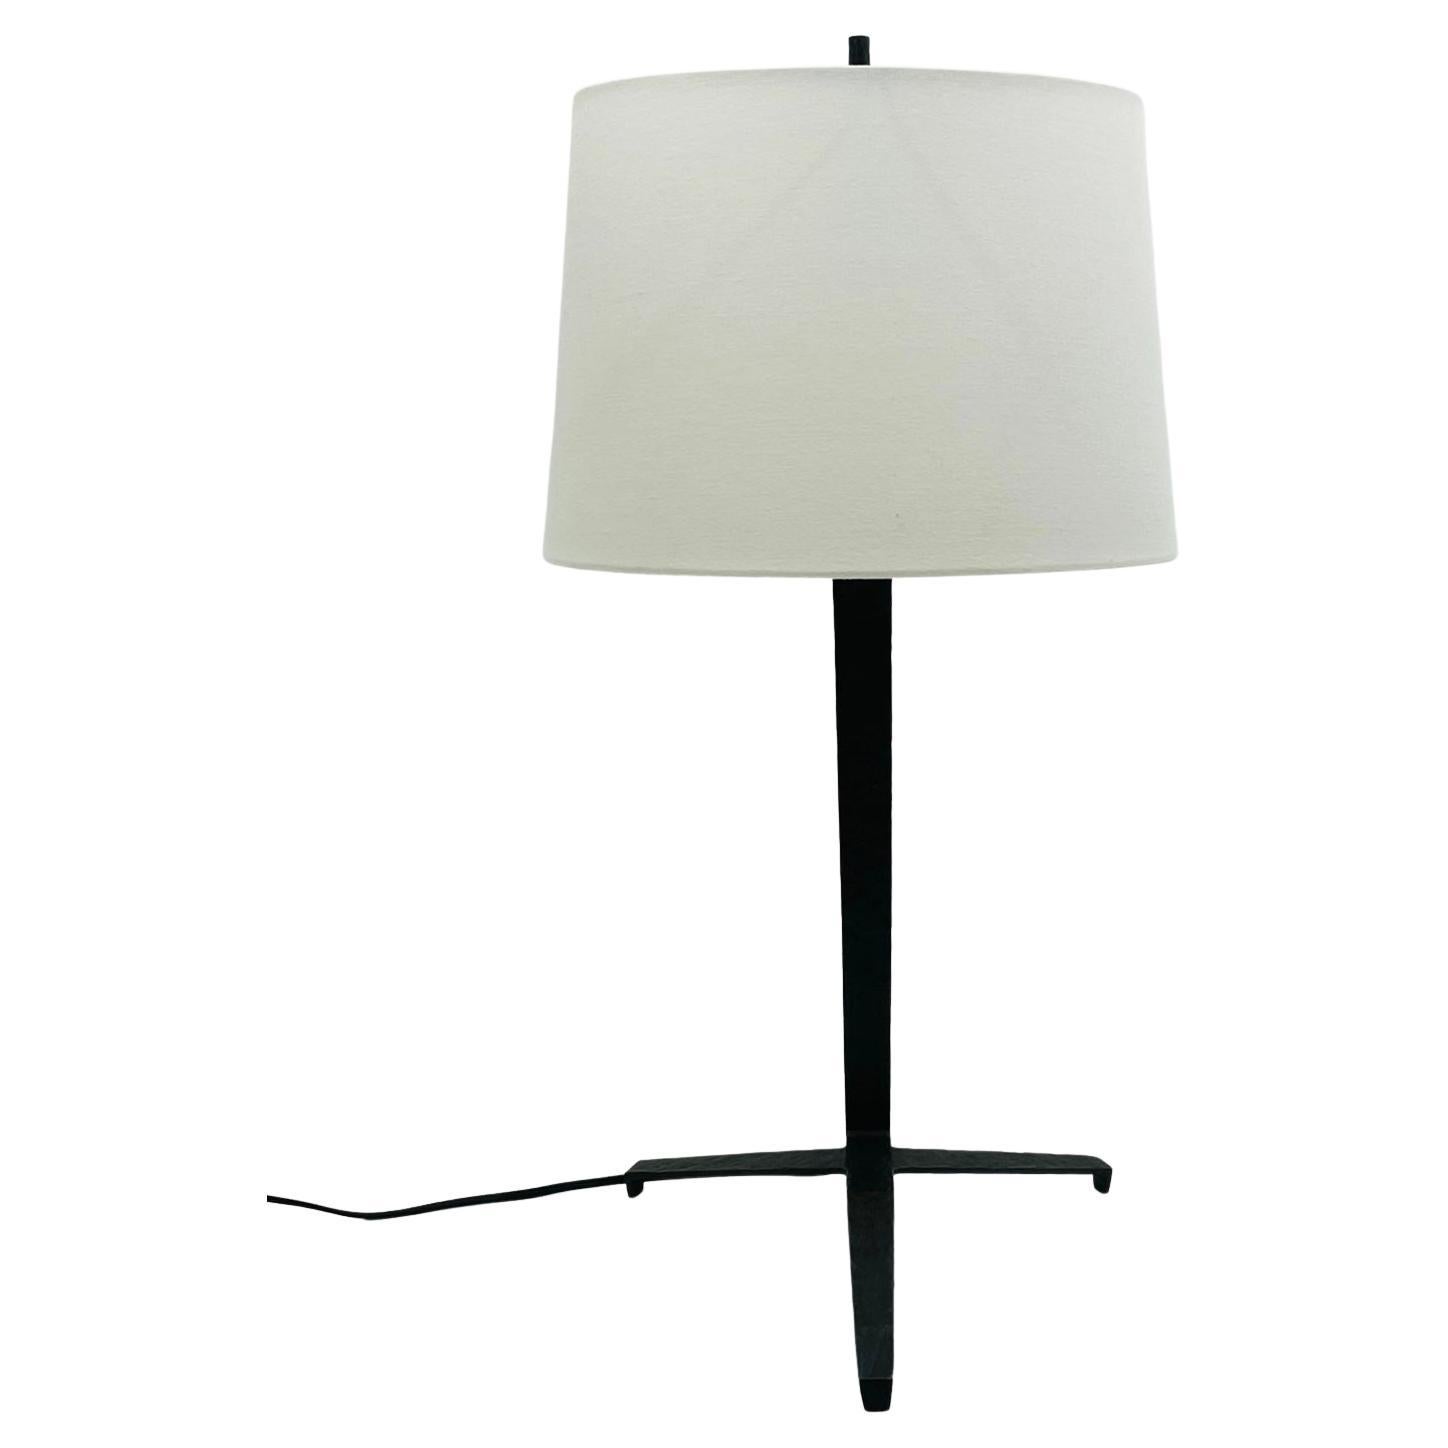 "Francesco" Table Lamp by Thomas O'Brien for Visual Comfort